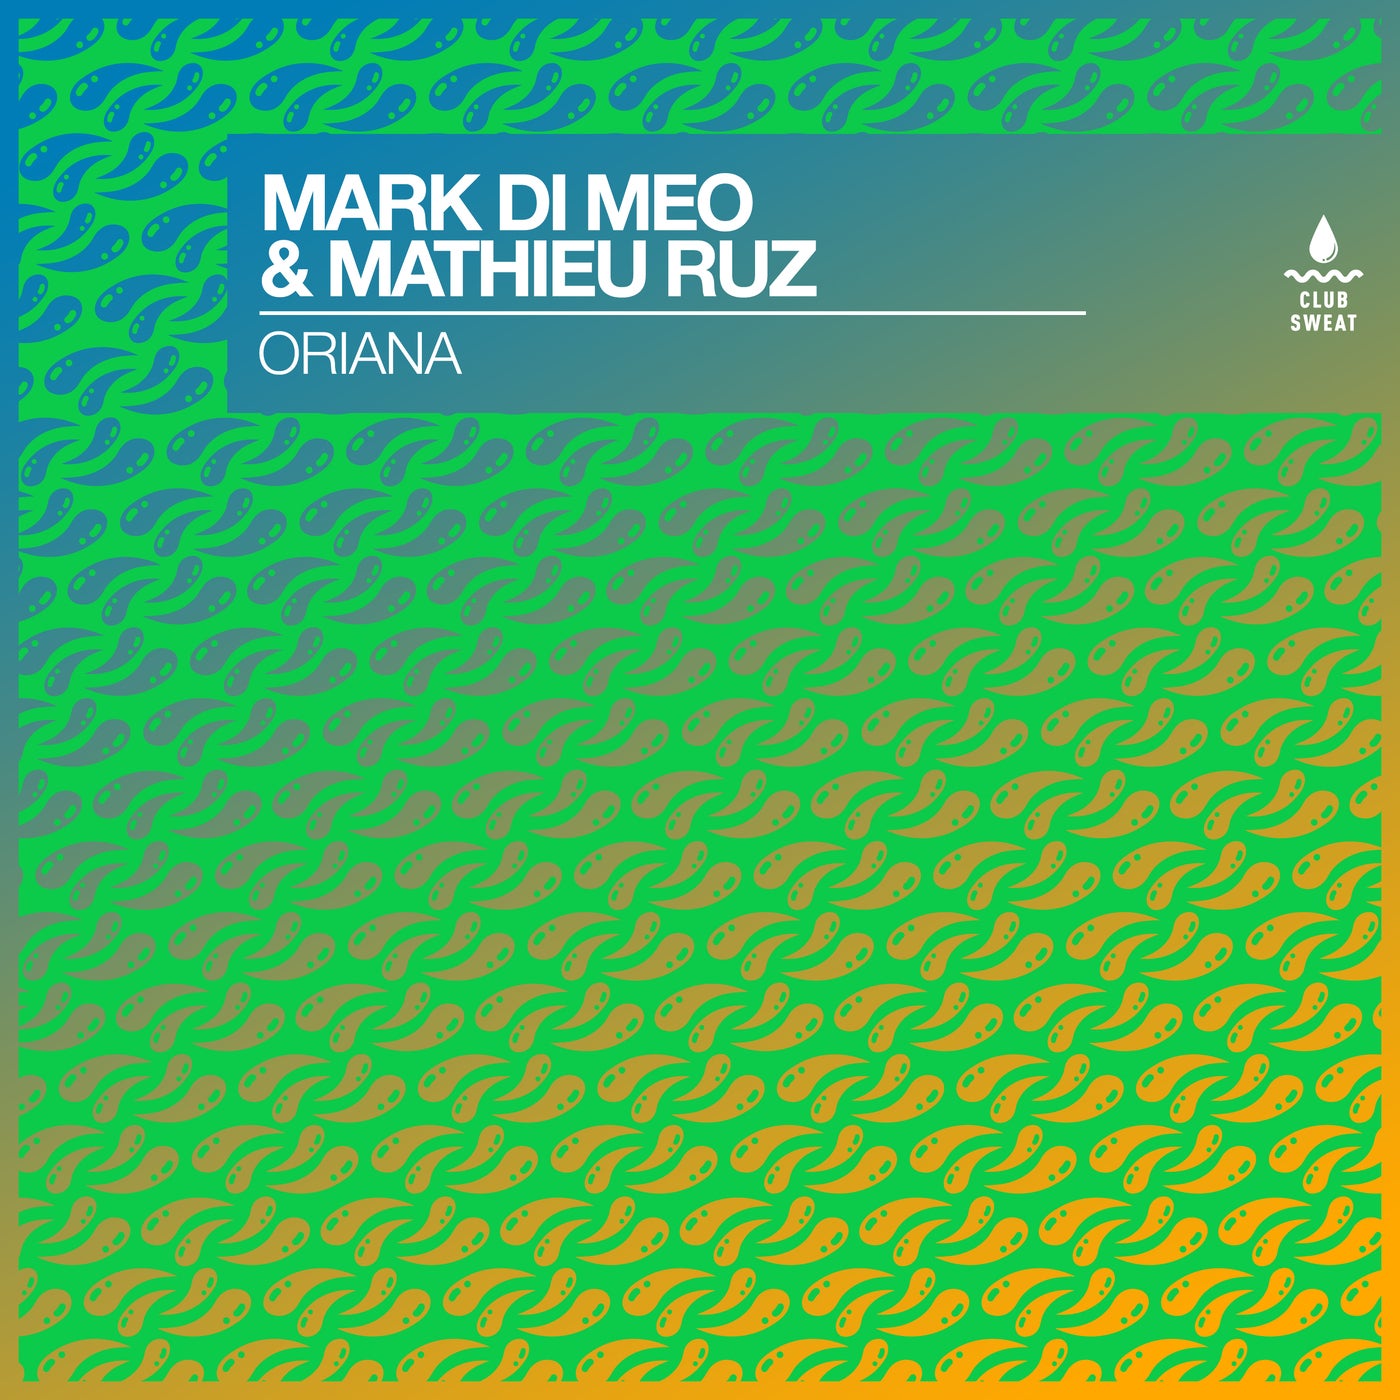 image cover: Mark Di Meo, Mathieu Ruz - Oriana (Extended Mix) on Club Sweat